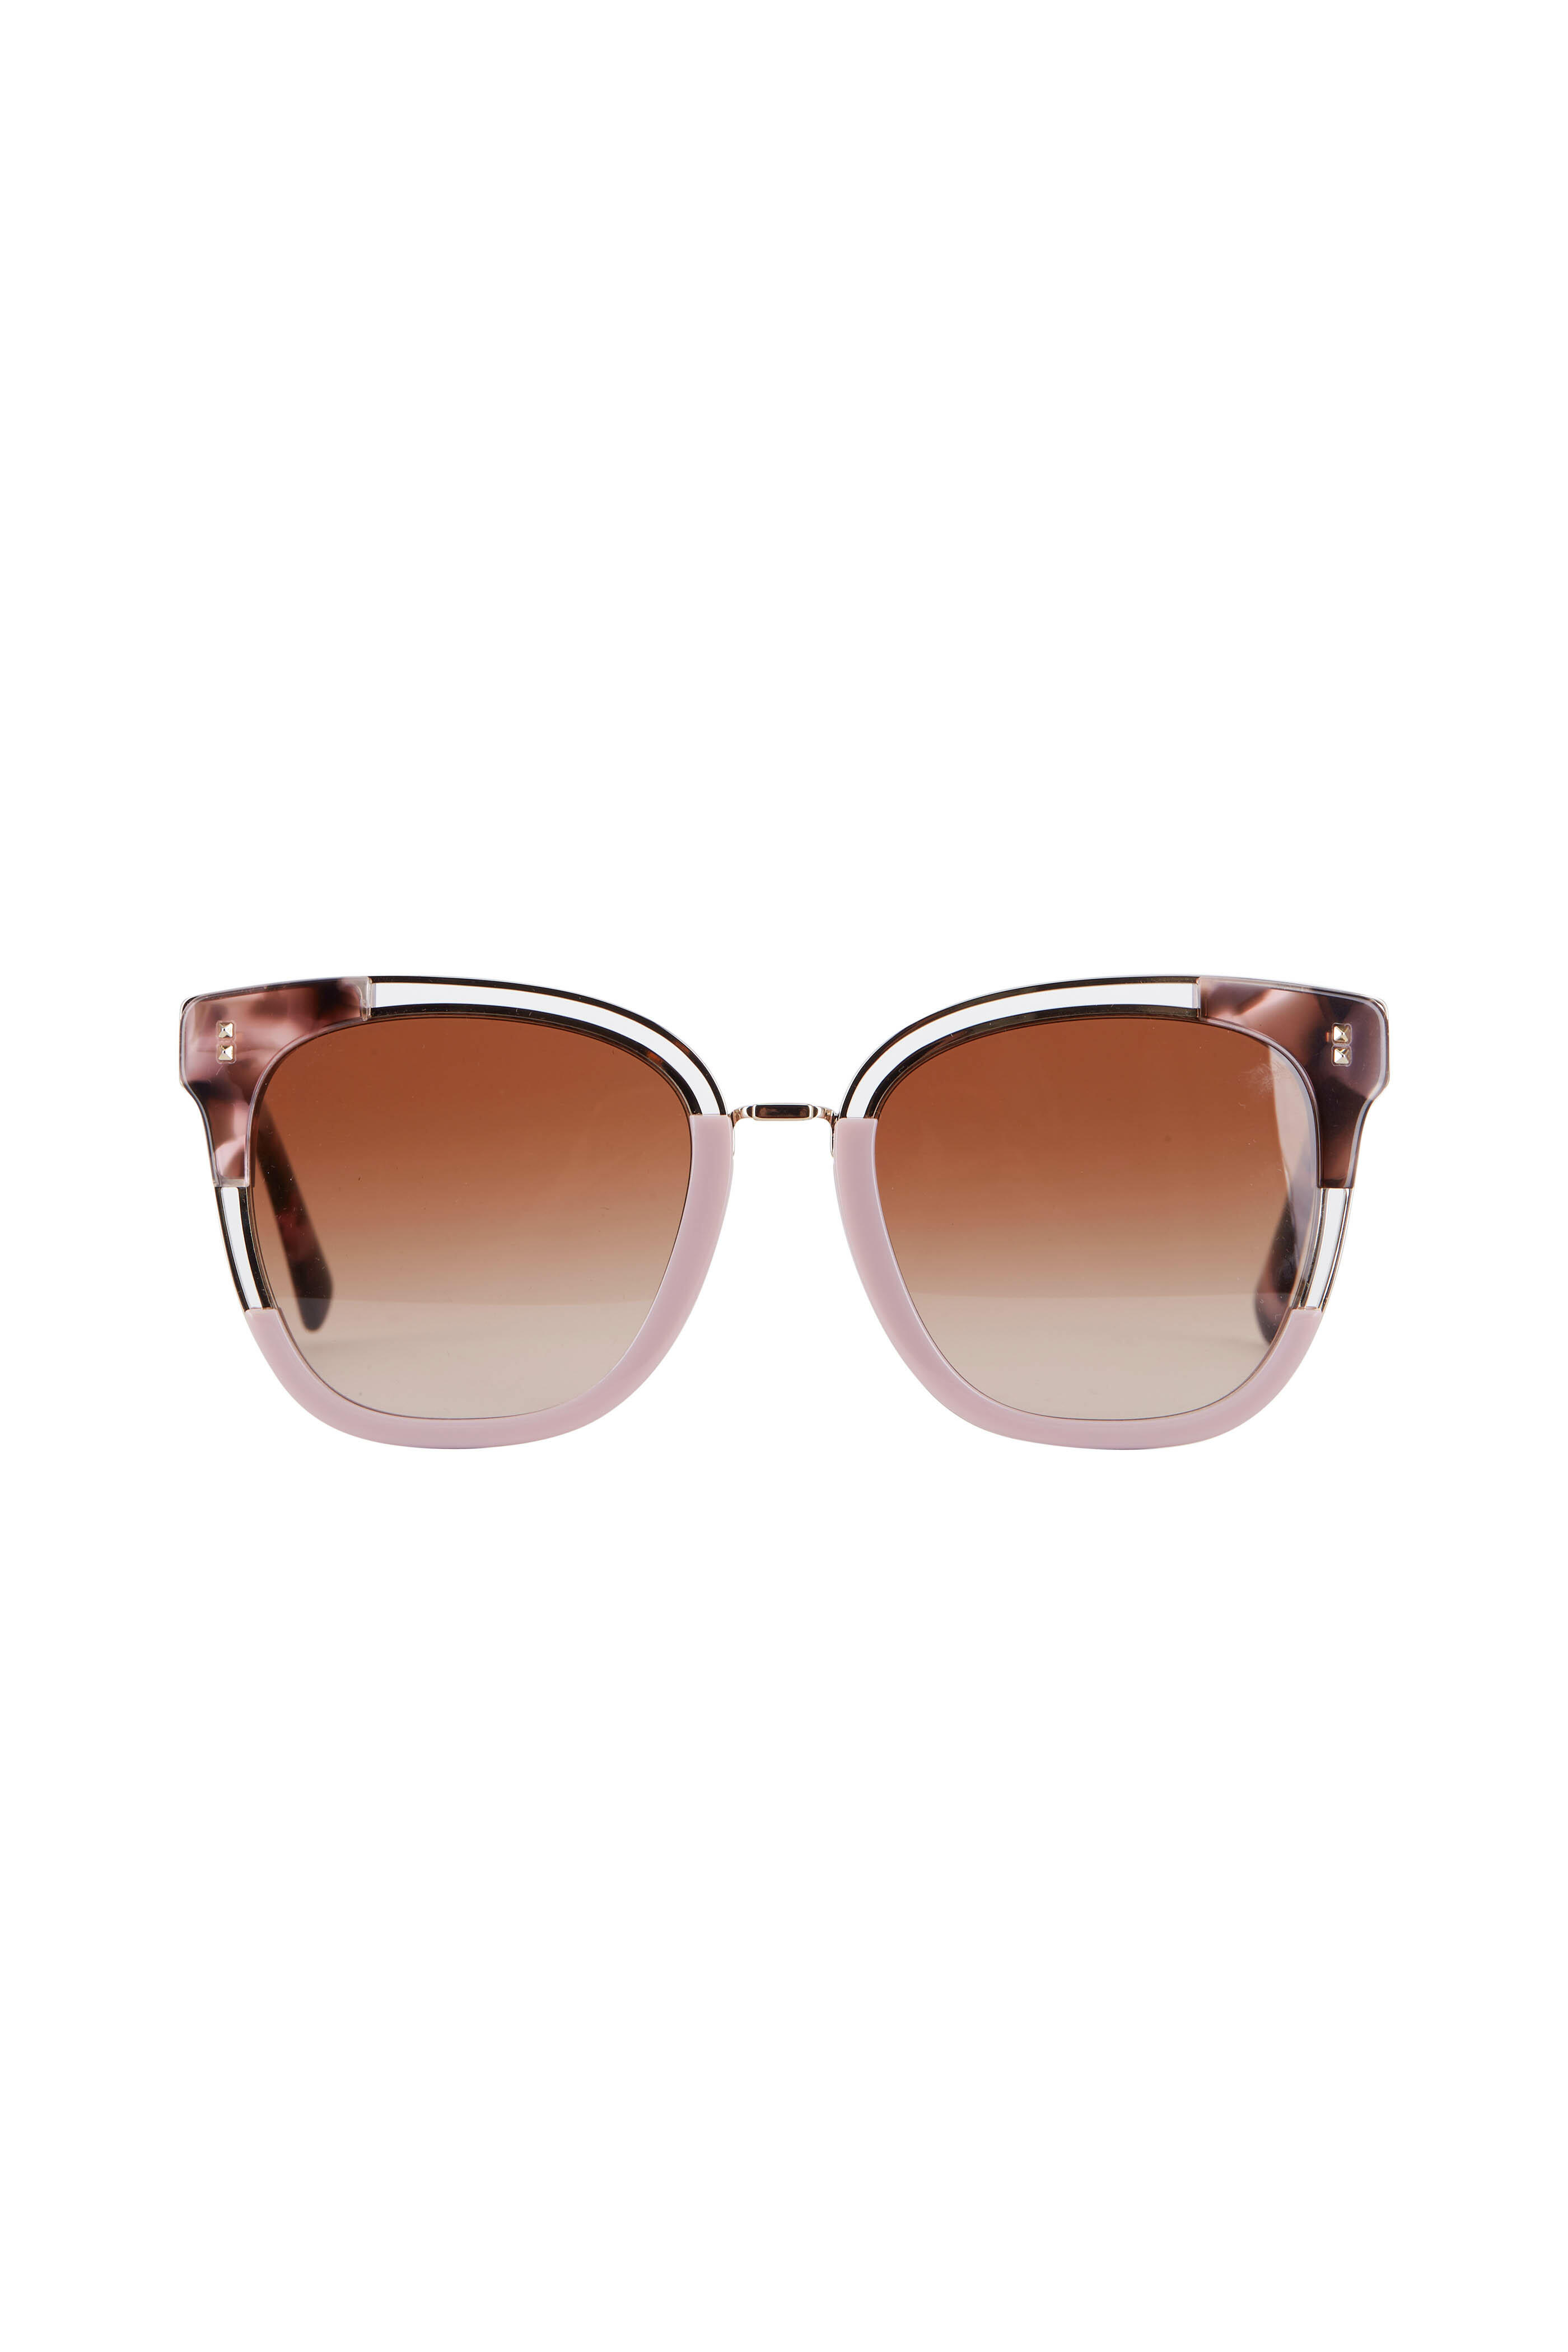 Valentino - Pink Havana Square Sunglasses | Mitchell Stores